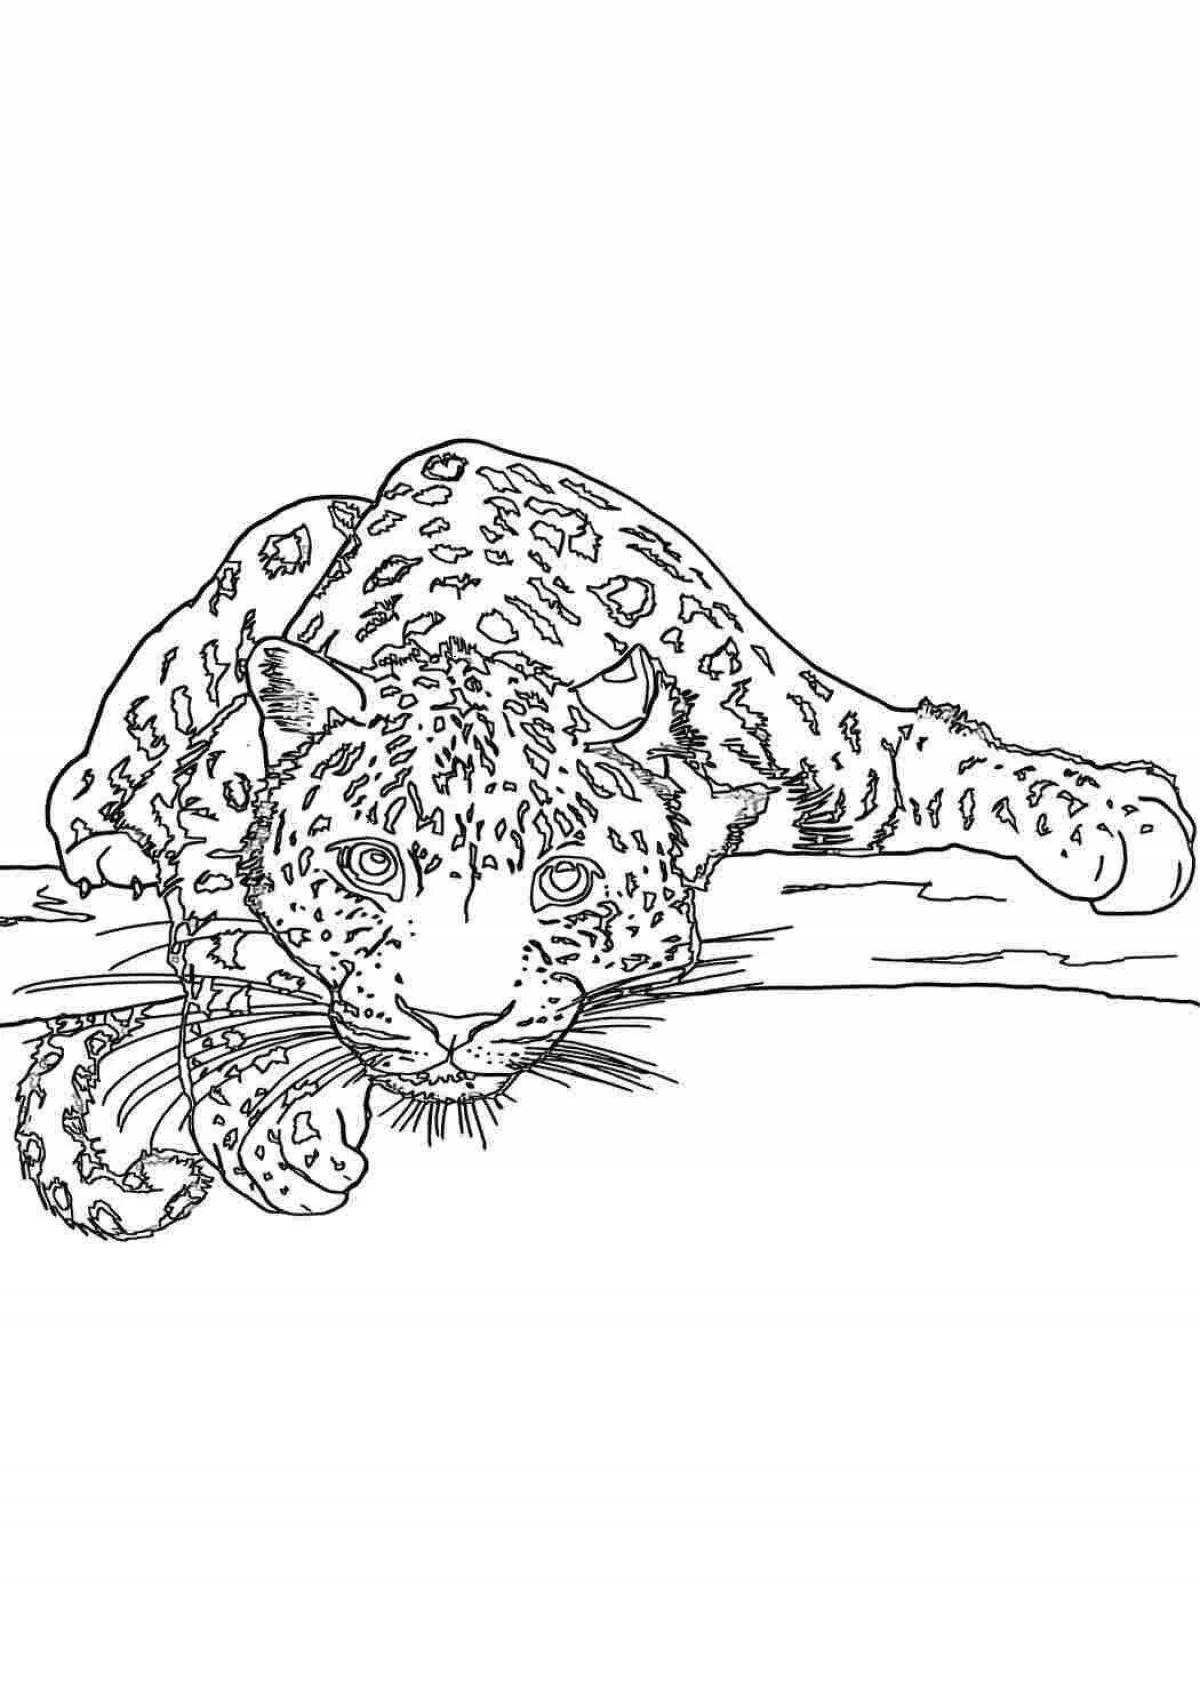 Adorable snow leopard coloring page